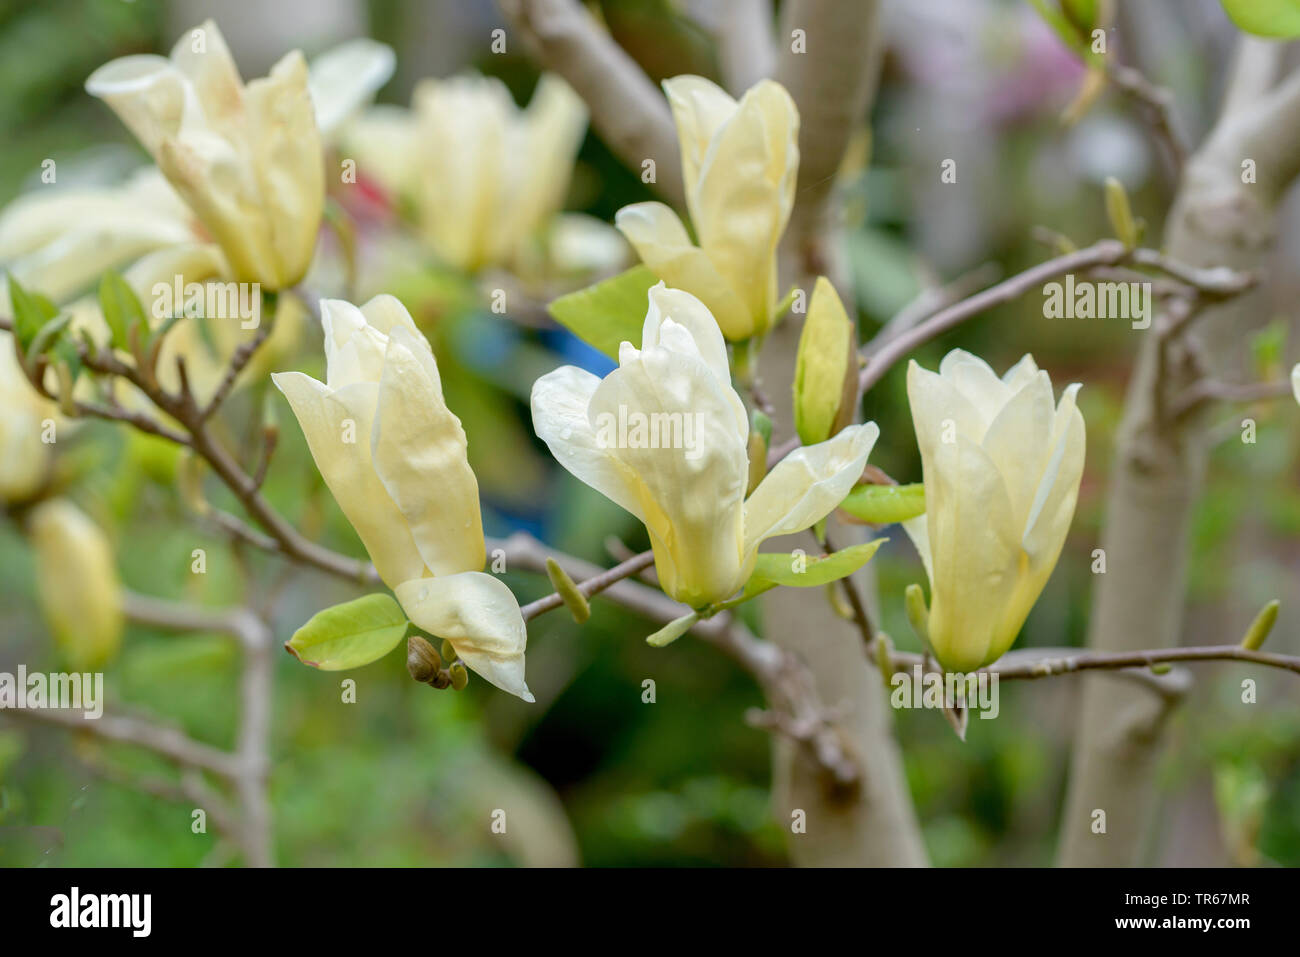 Lily Tree, Yulan (Magnolia denudata 'Yellow River', Magnolia denudata Yellow River), flowers of cultivar Yellow River Stock Photo